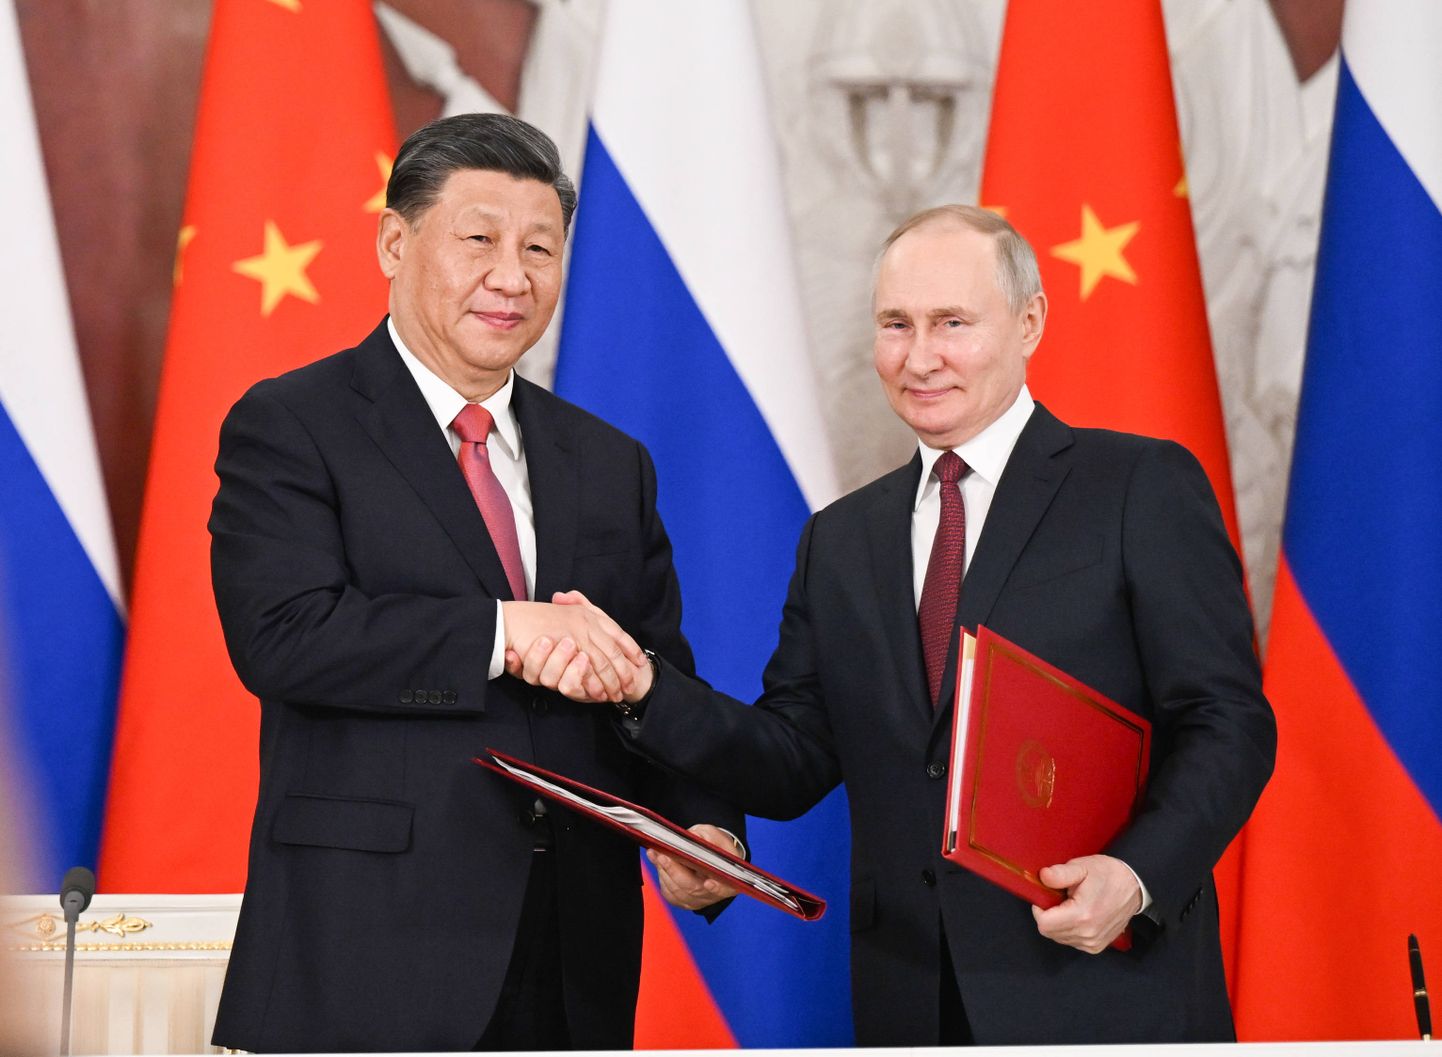 Hiina president Xi Jinping and Venemaa president Vladimir Putin.